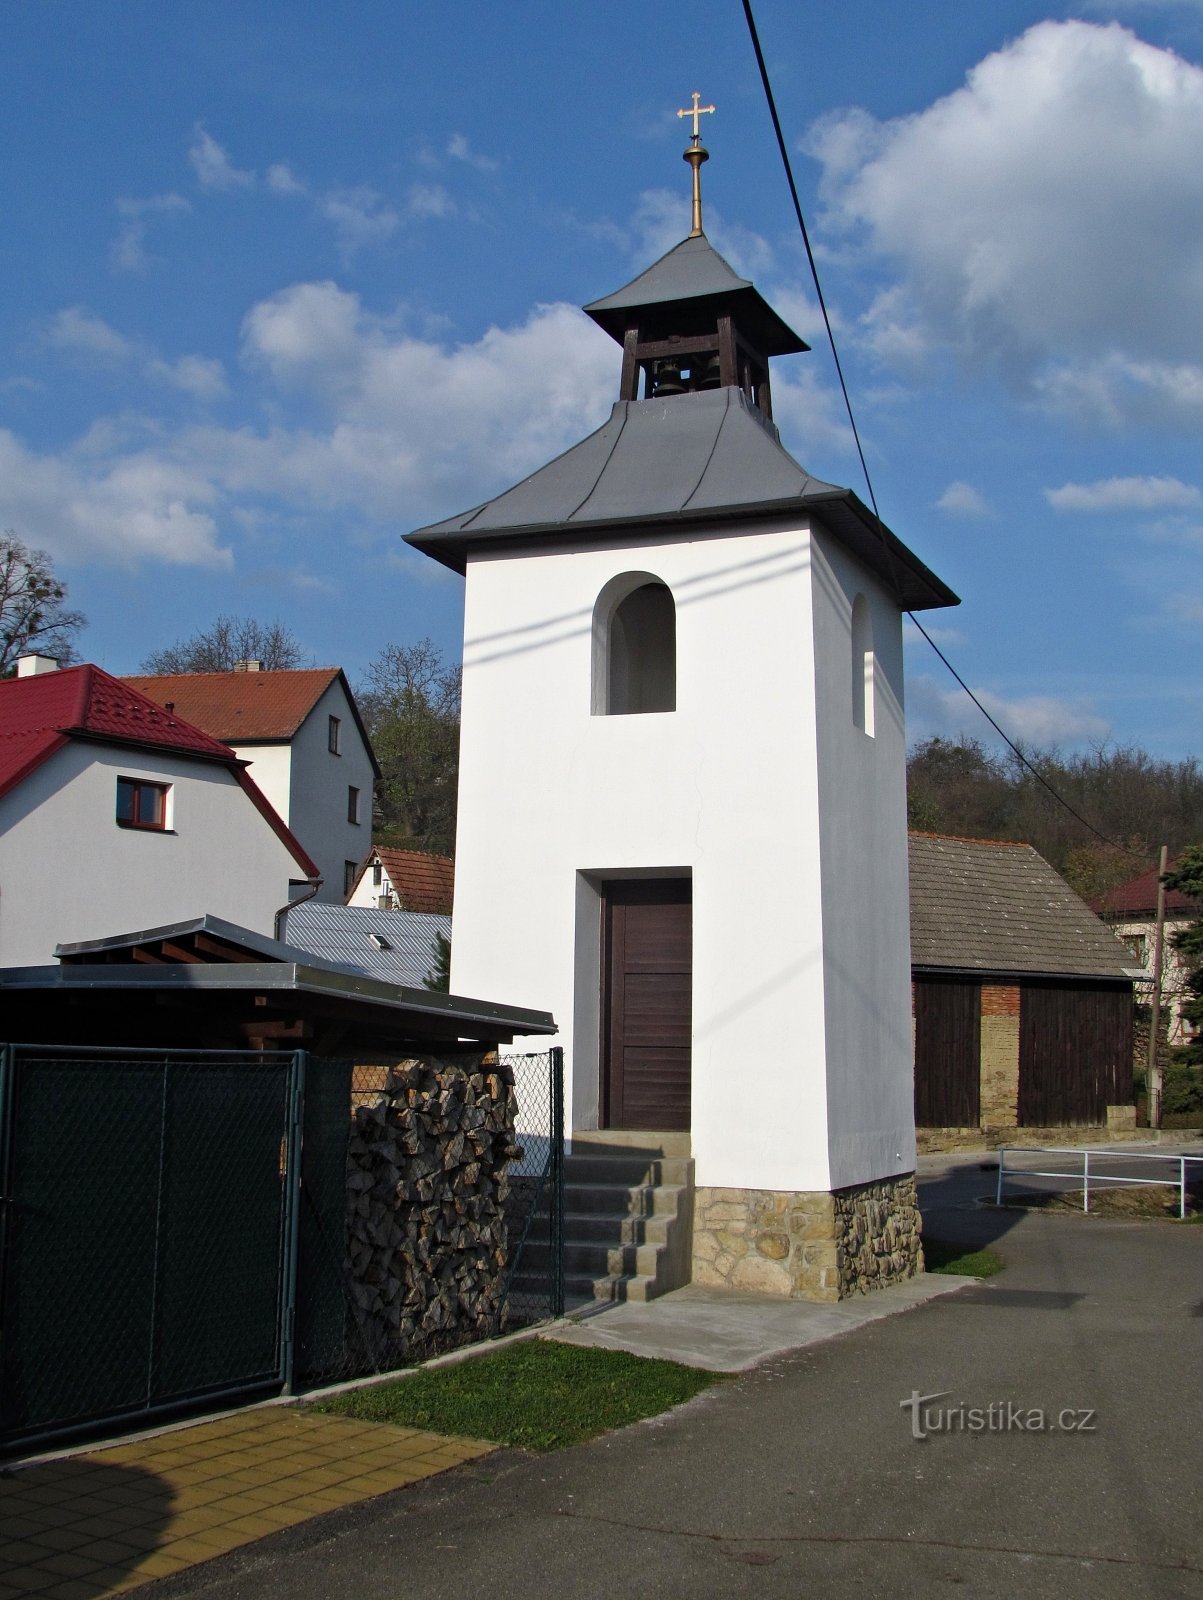 Ludkovice - spomenici u središtu sela